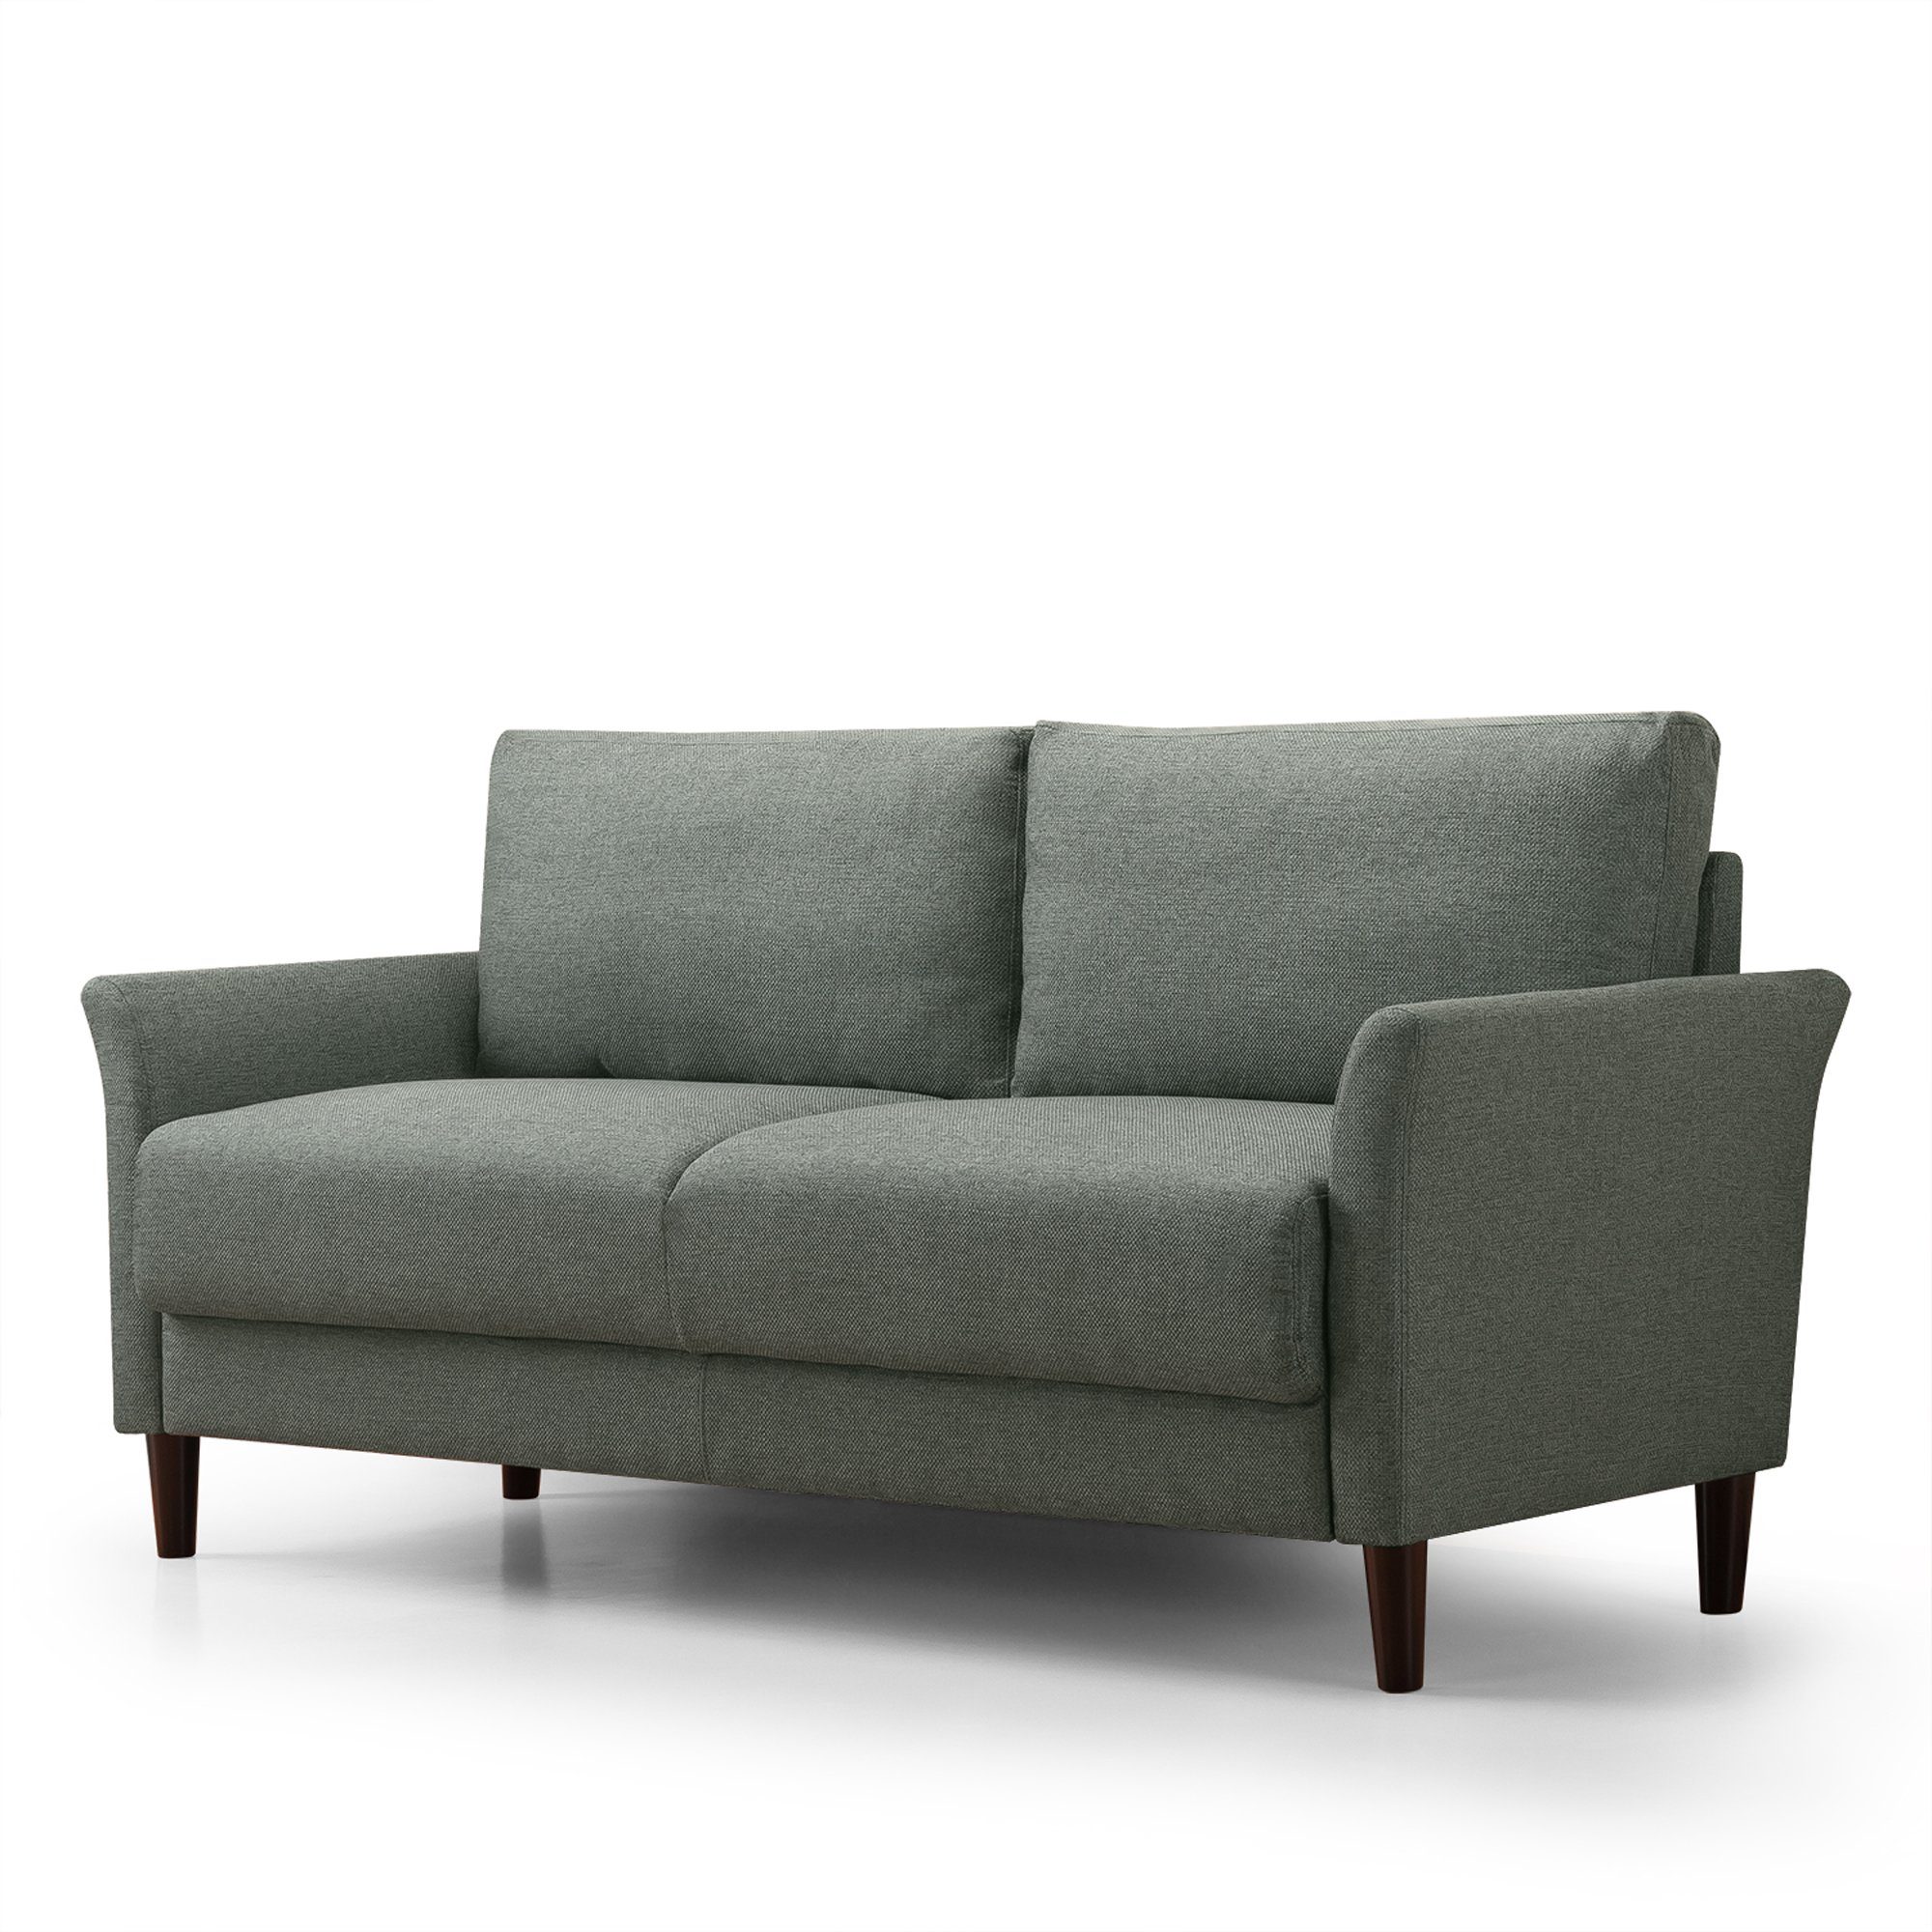 ZINUS 3-Sitzer JACKIE 3-Sitziges Gepolstertes Zeitloses Sofa grau